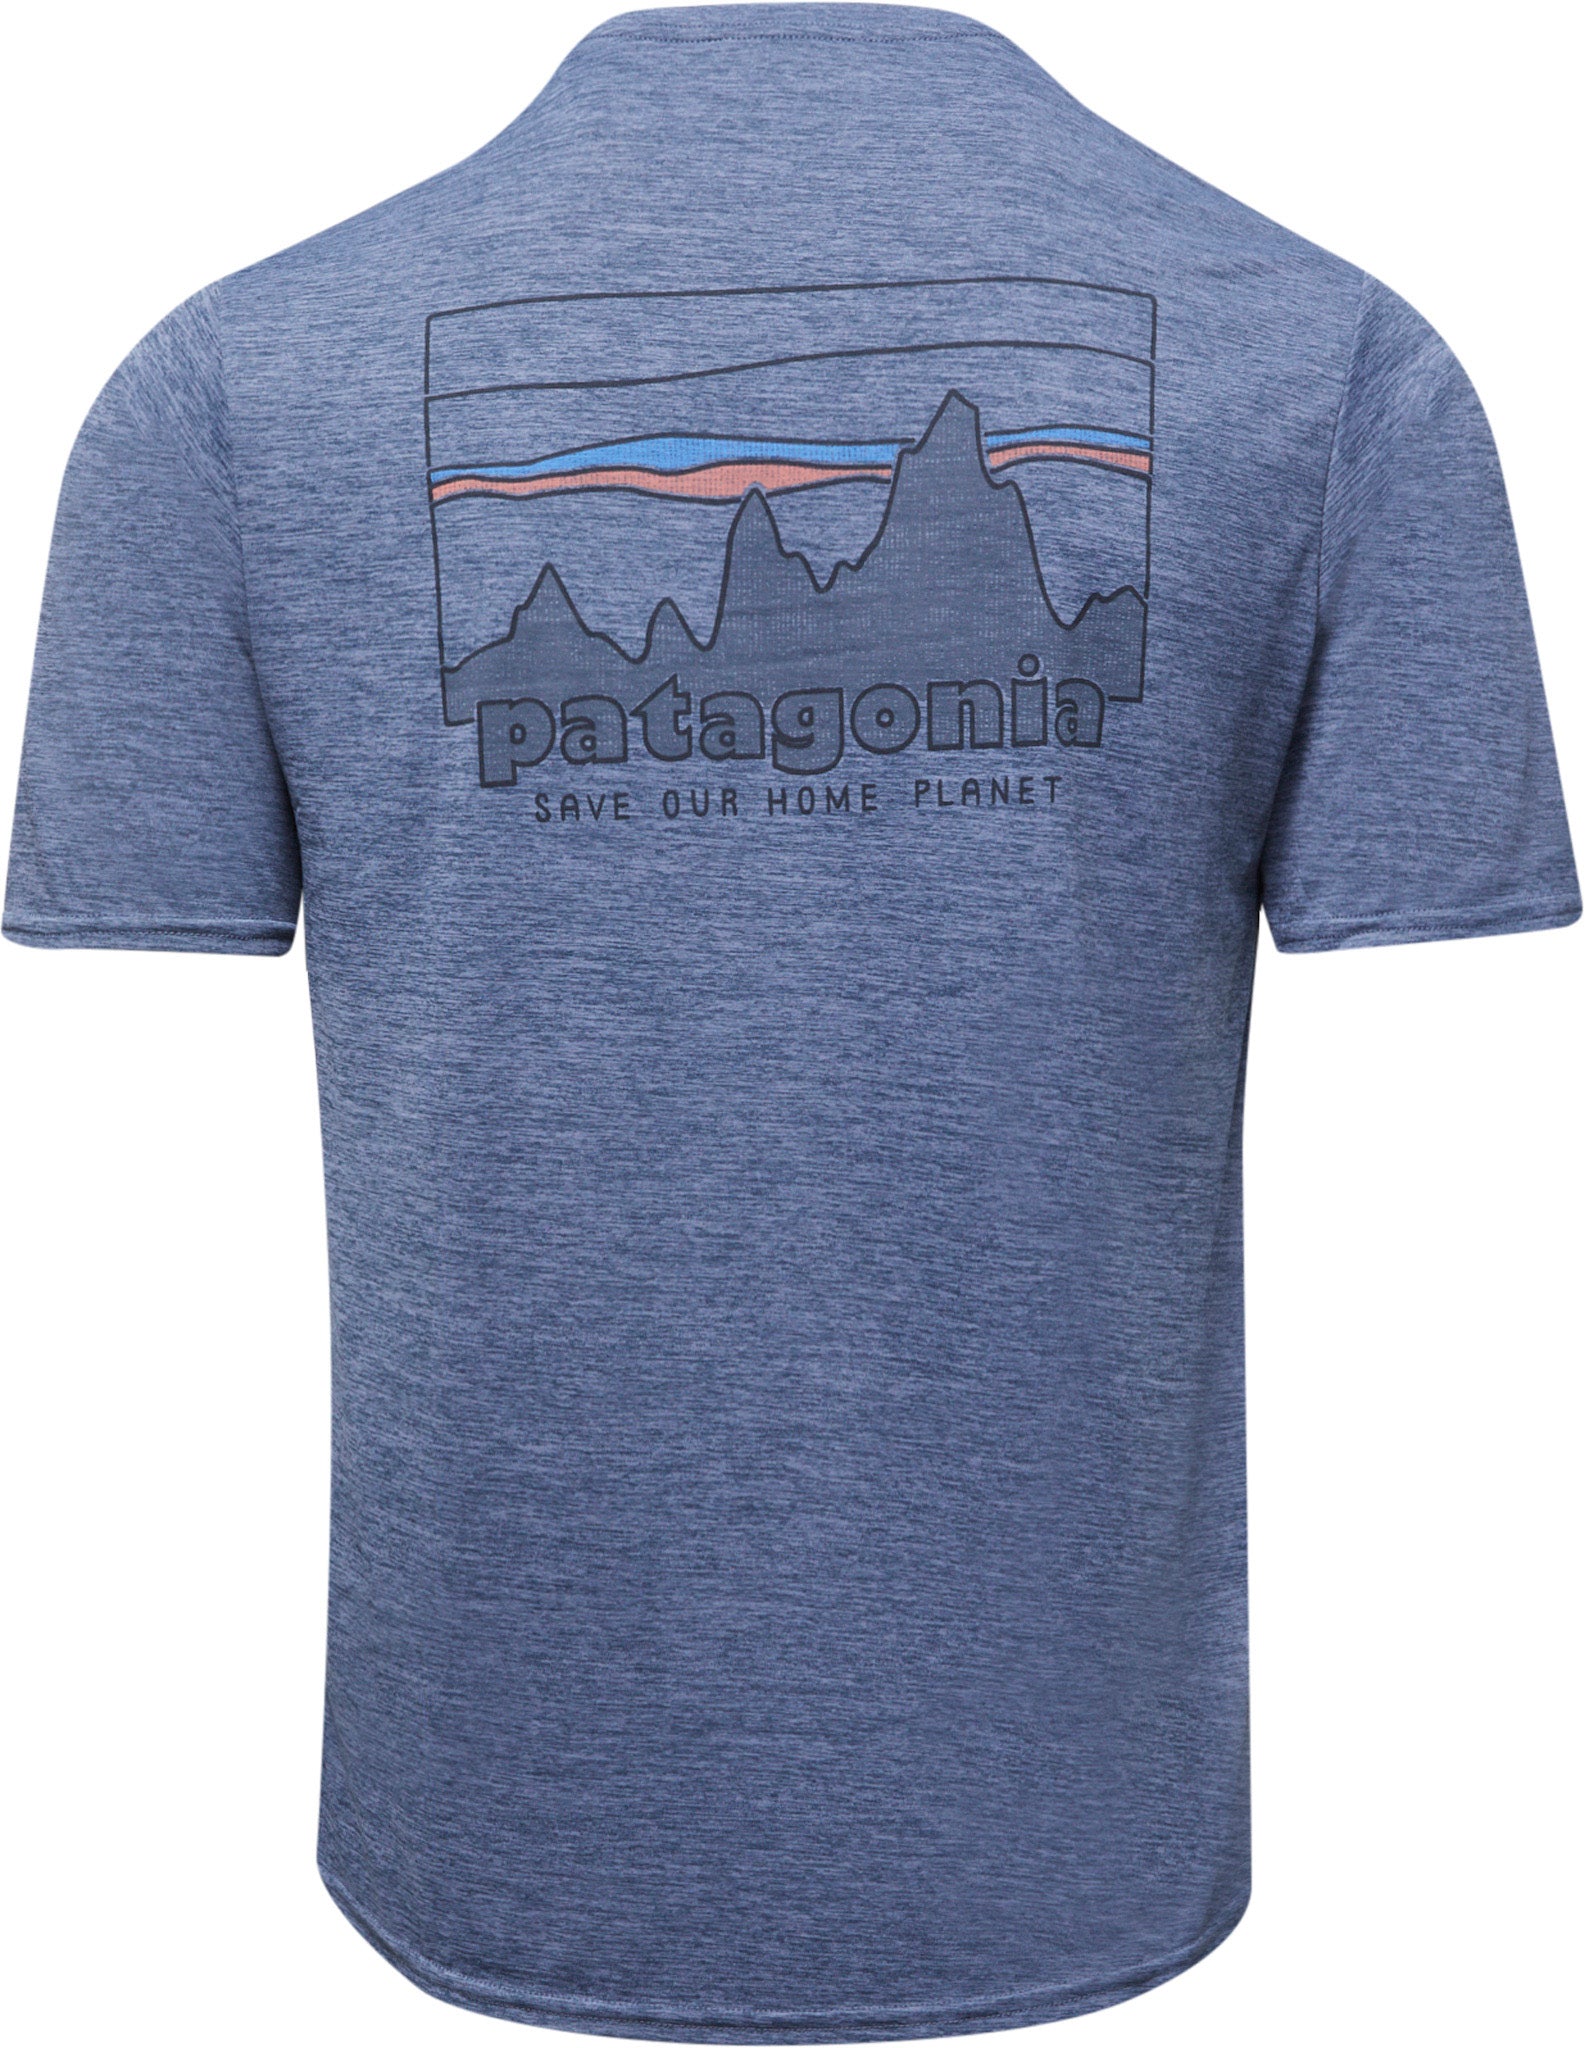 Patagonia Capilene Lightweight T-Shirt Review